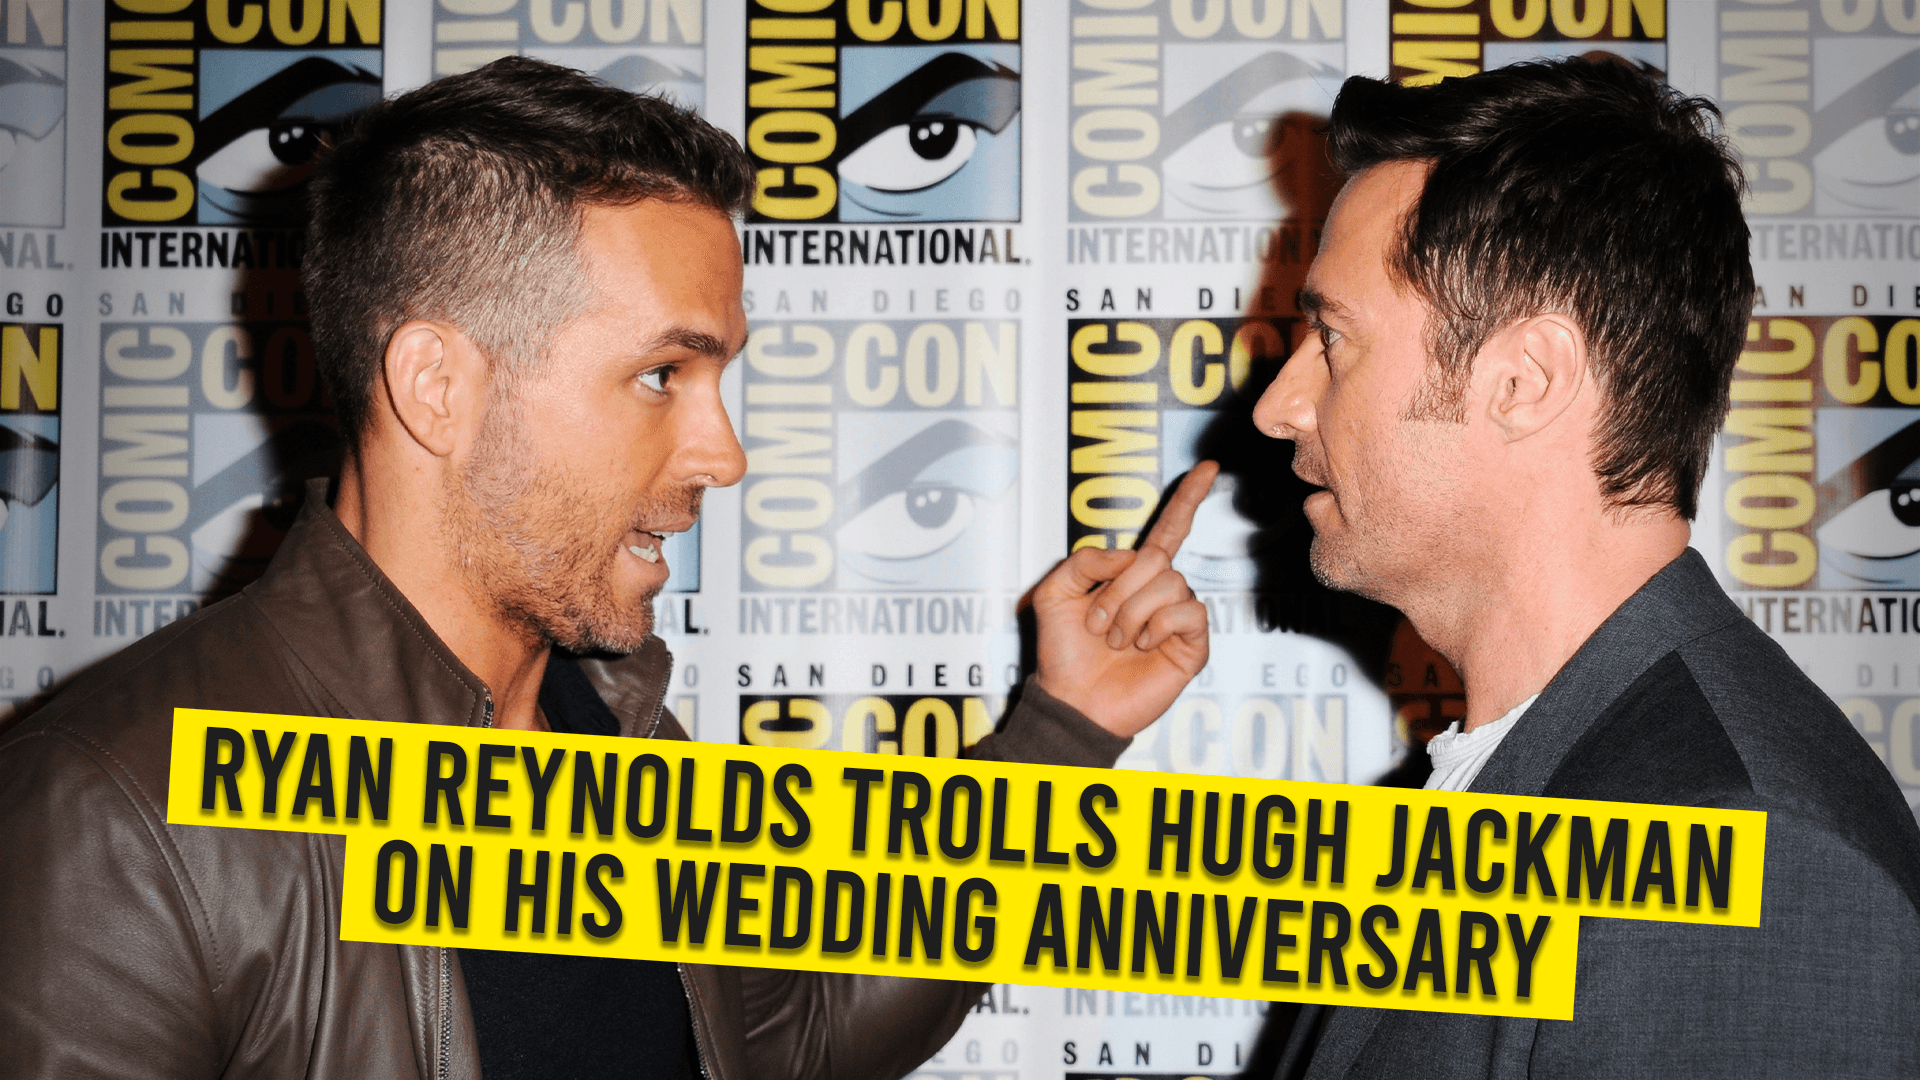 Ryan Reynolds Trolls Hugh Jackman on his Wedding Anniversary